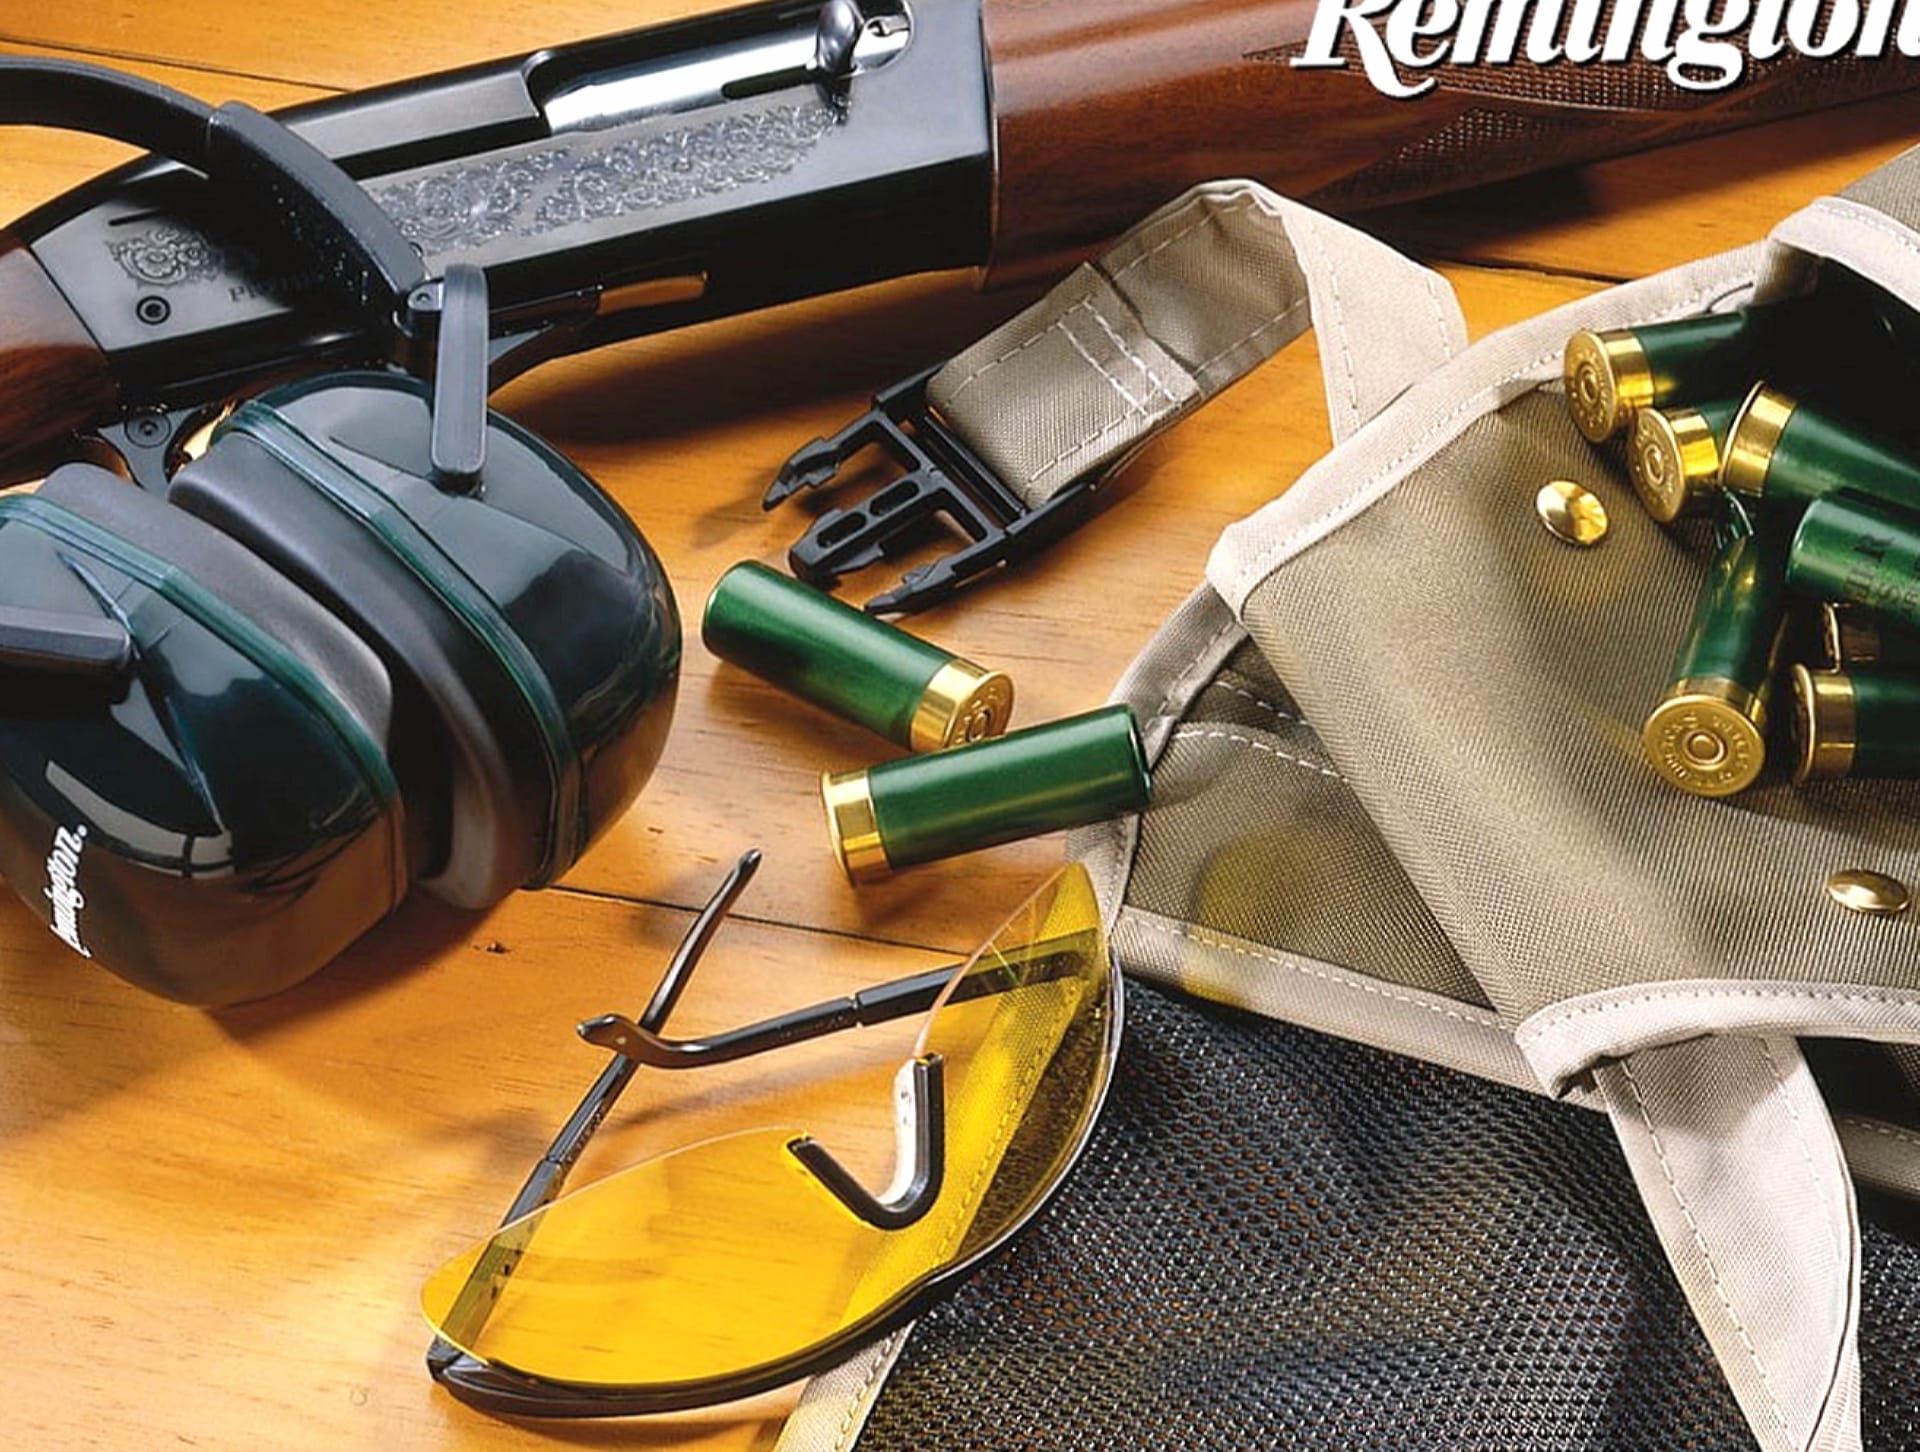 Remington Shotgun at 1600 x 1200 size wallpapers HD quality